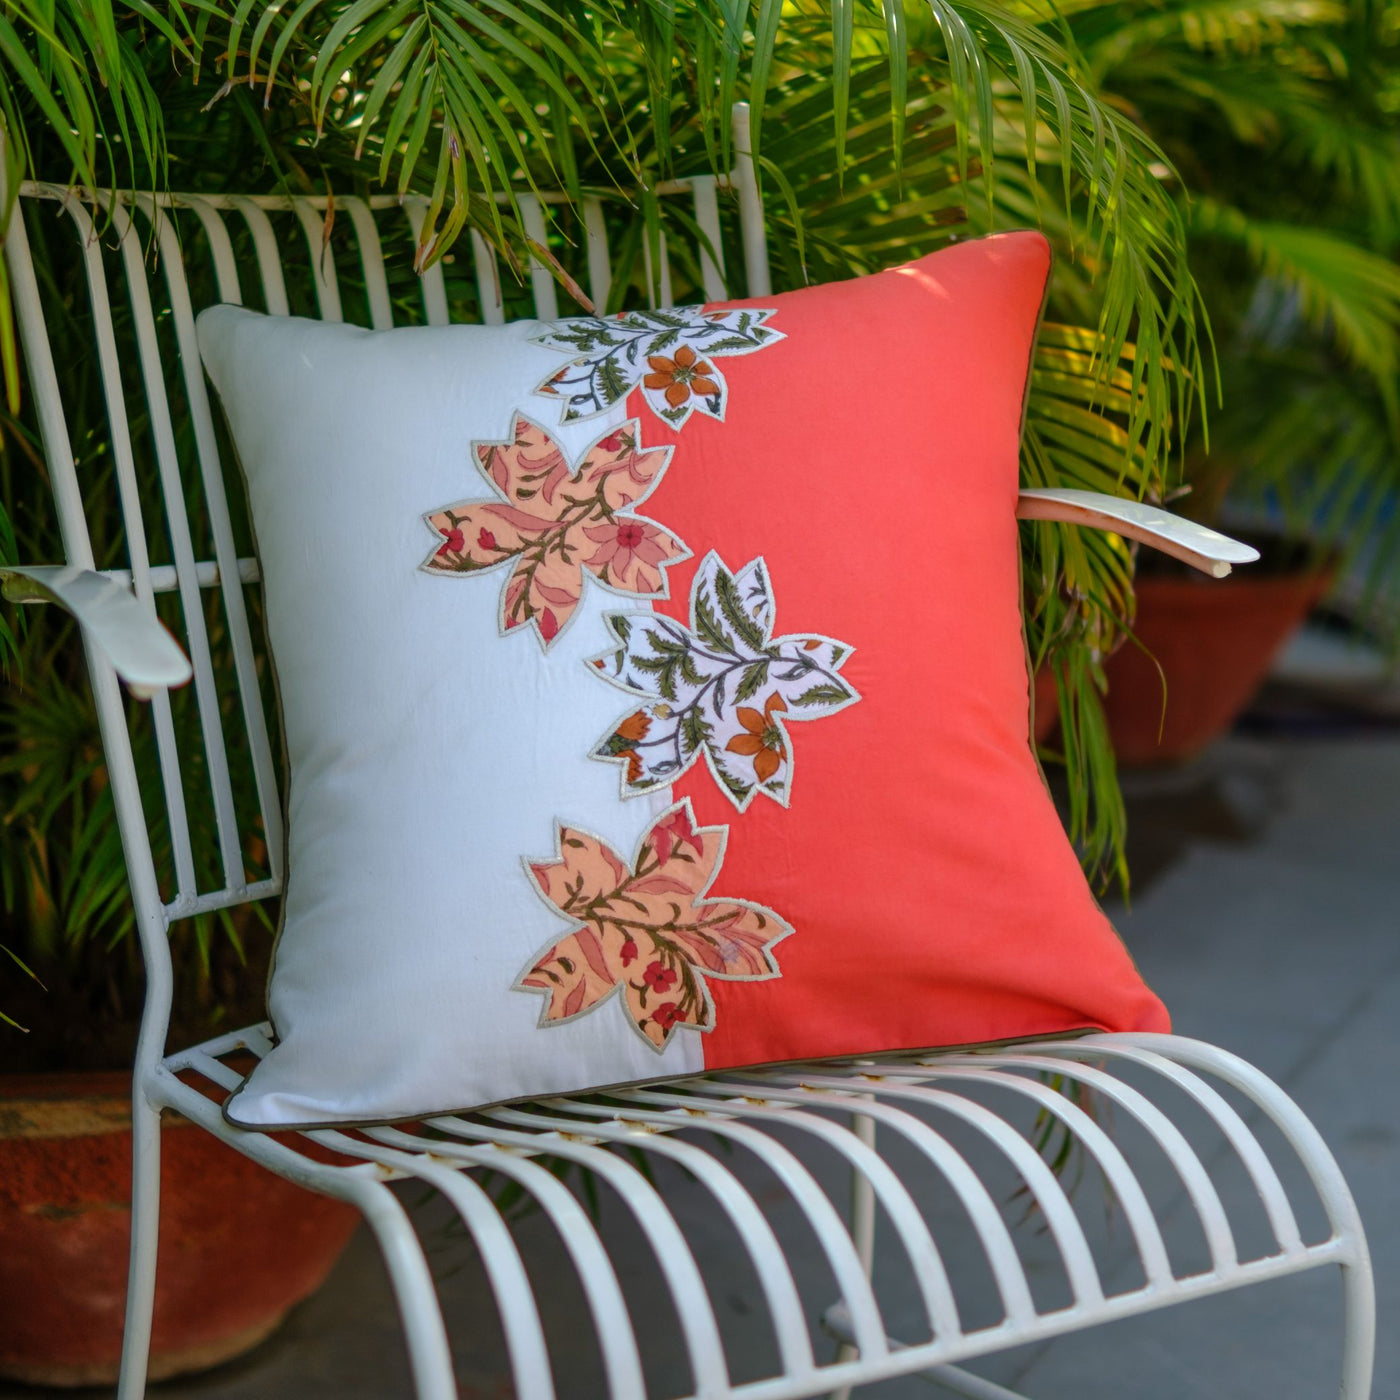 Applique Art Flower Cushion Cover